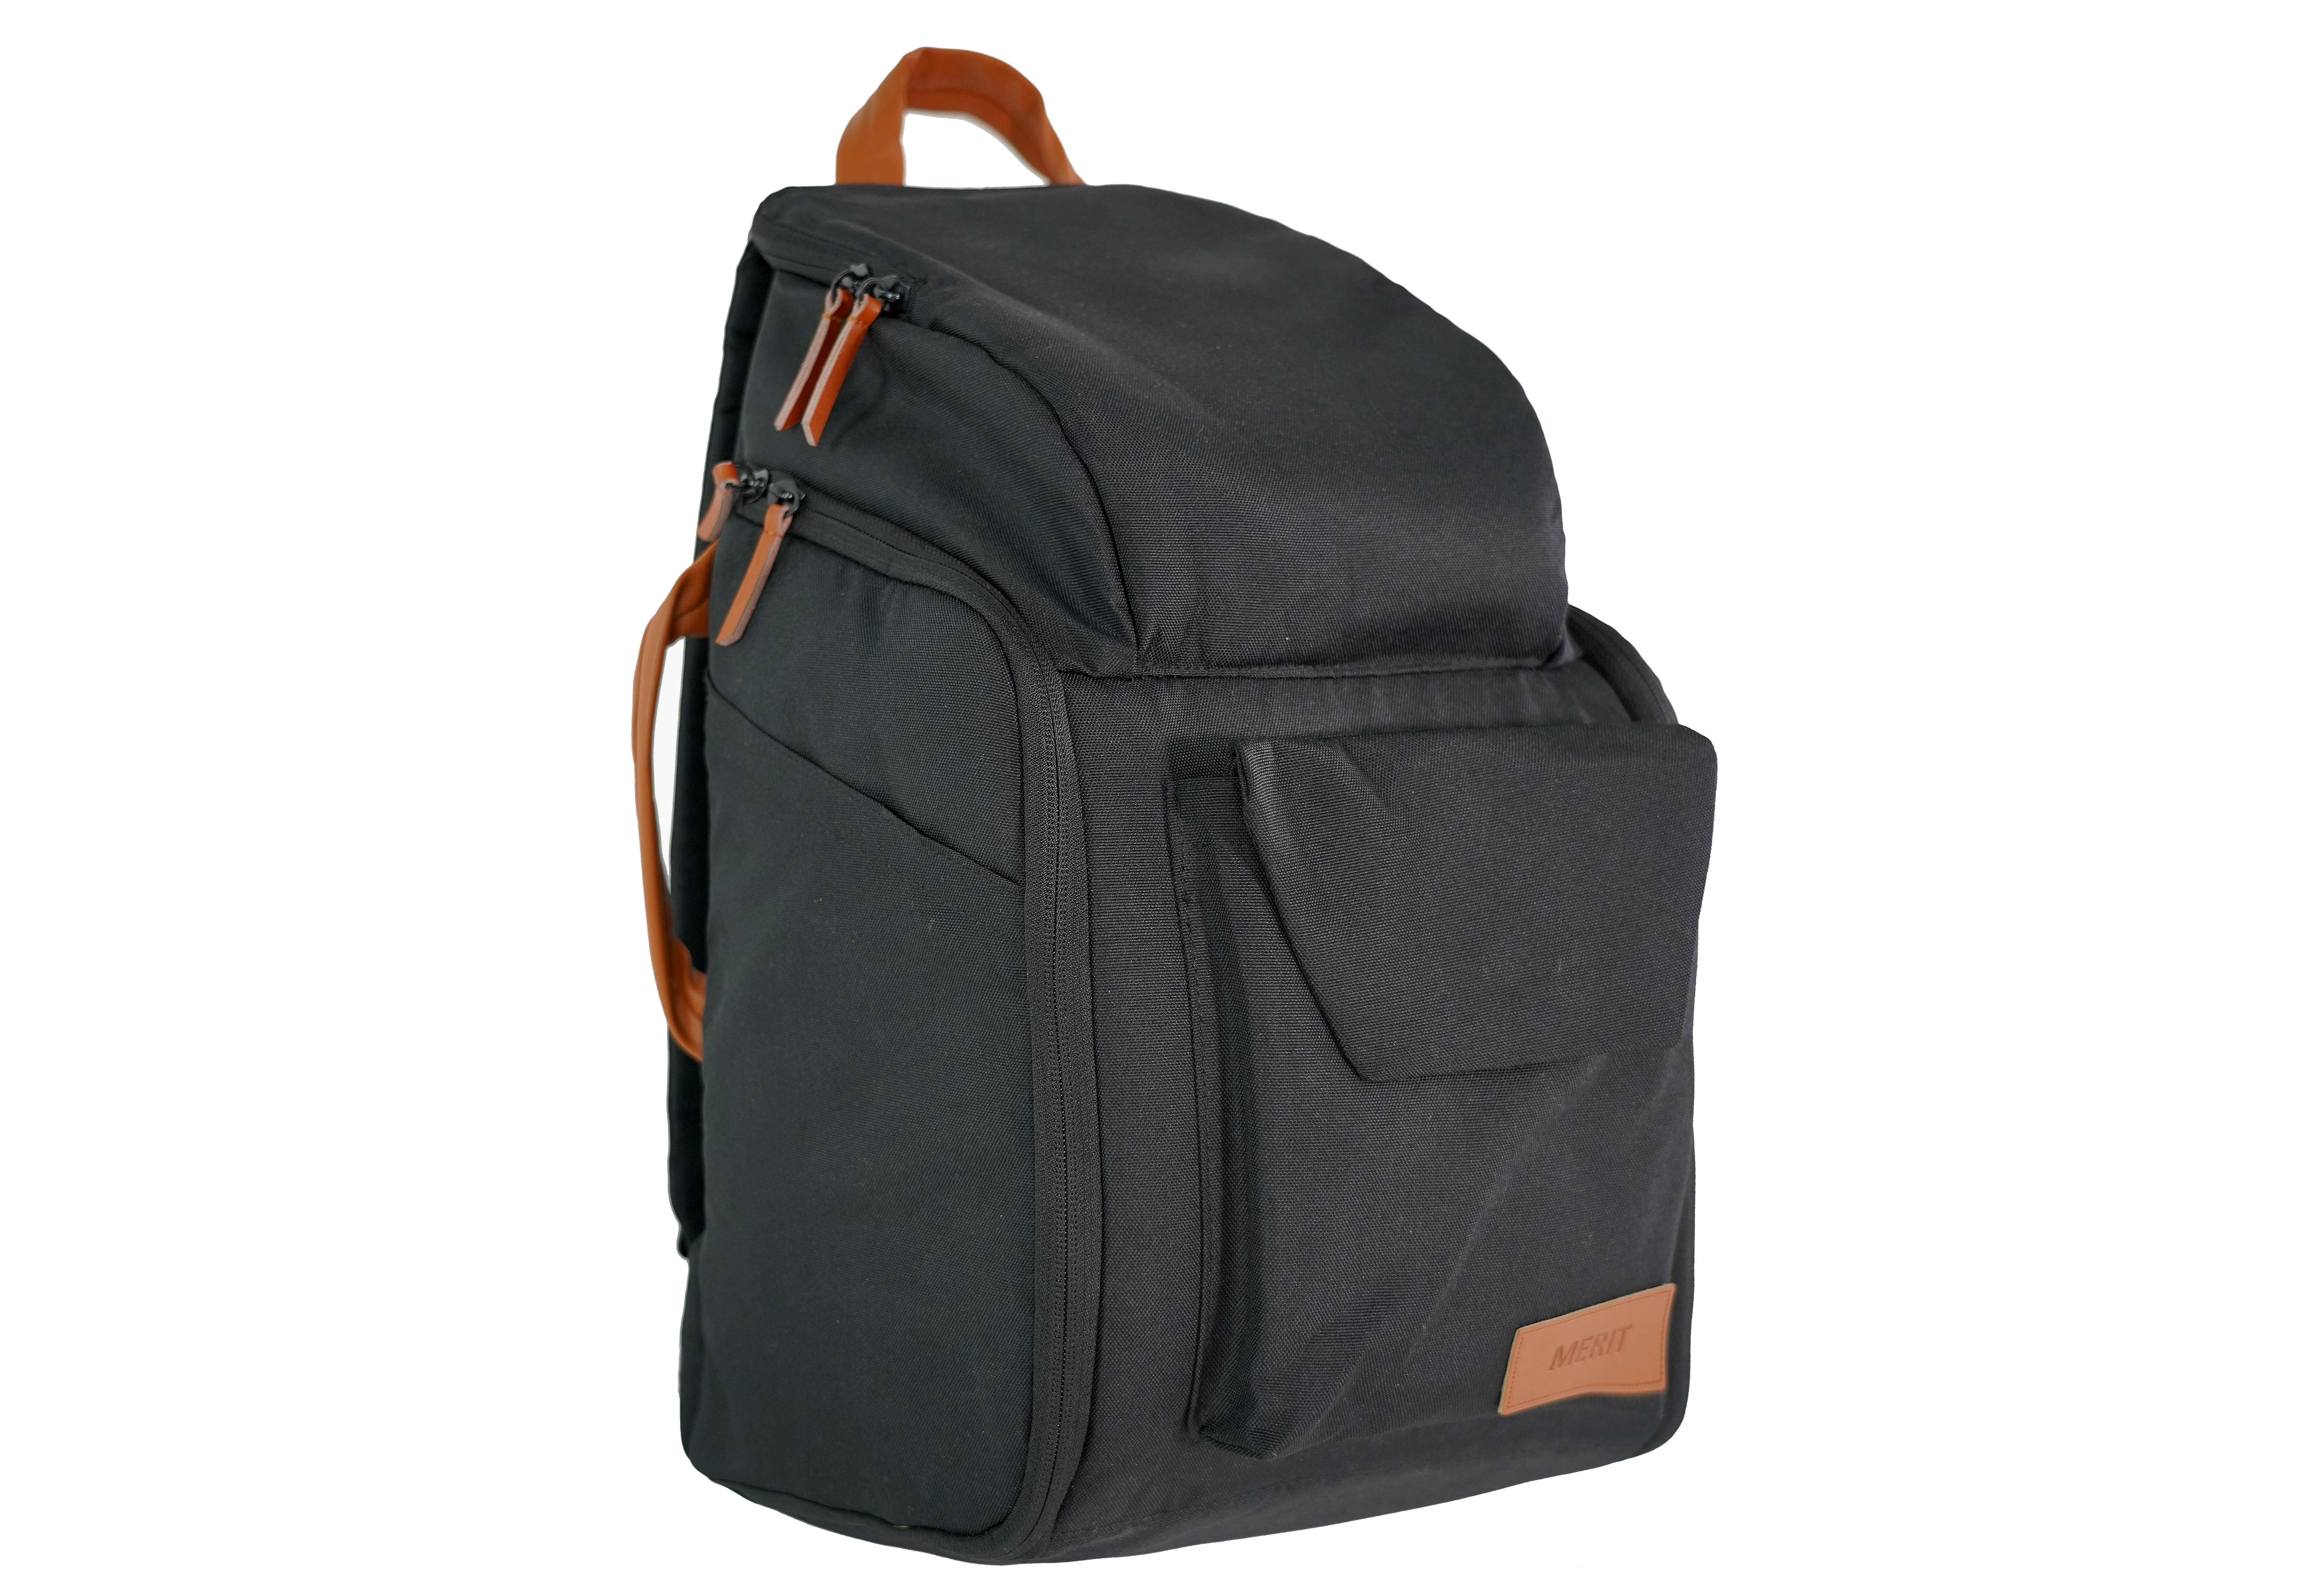 Adults Travel Unisex Fashionable Backpack